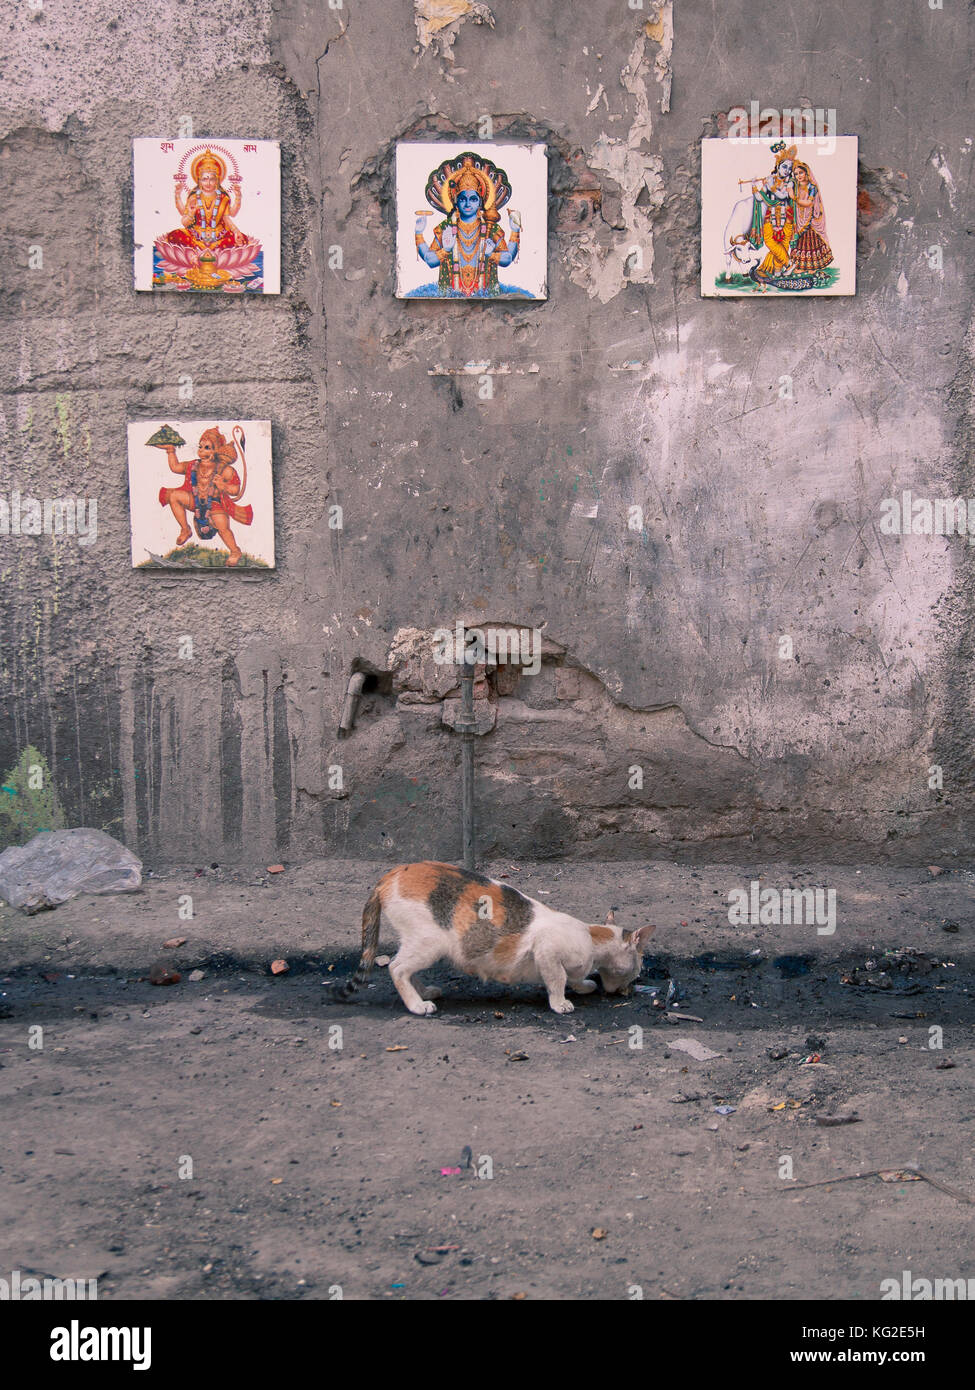 Street cat under Hindu god images Stock Photo